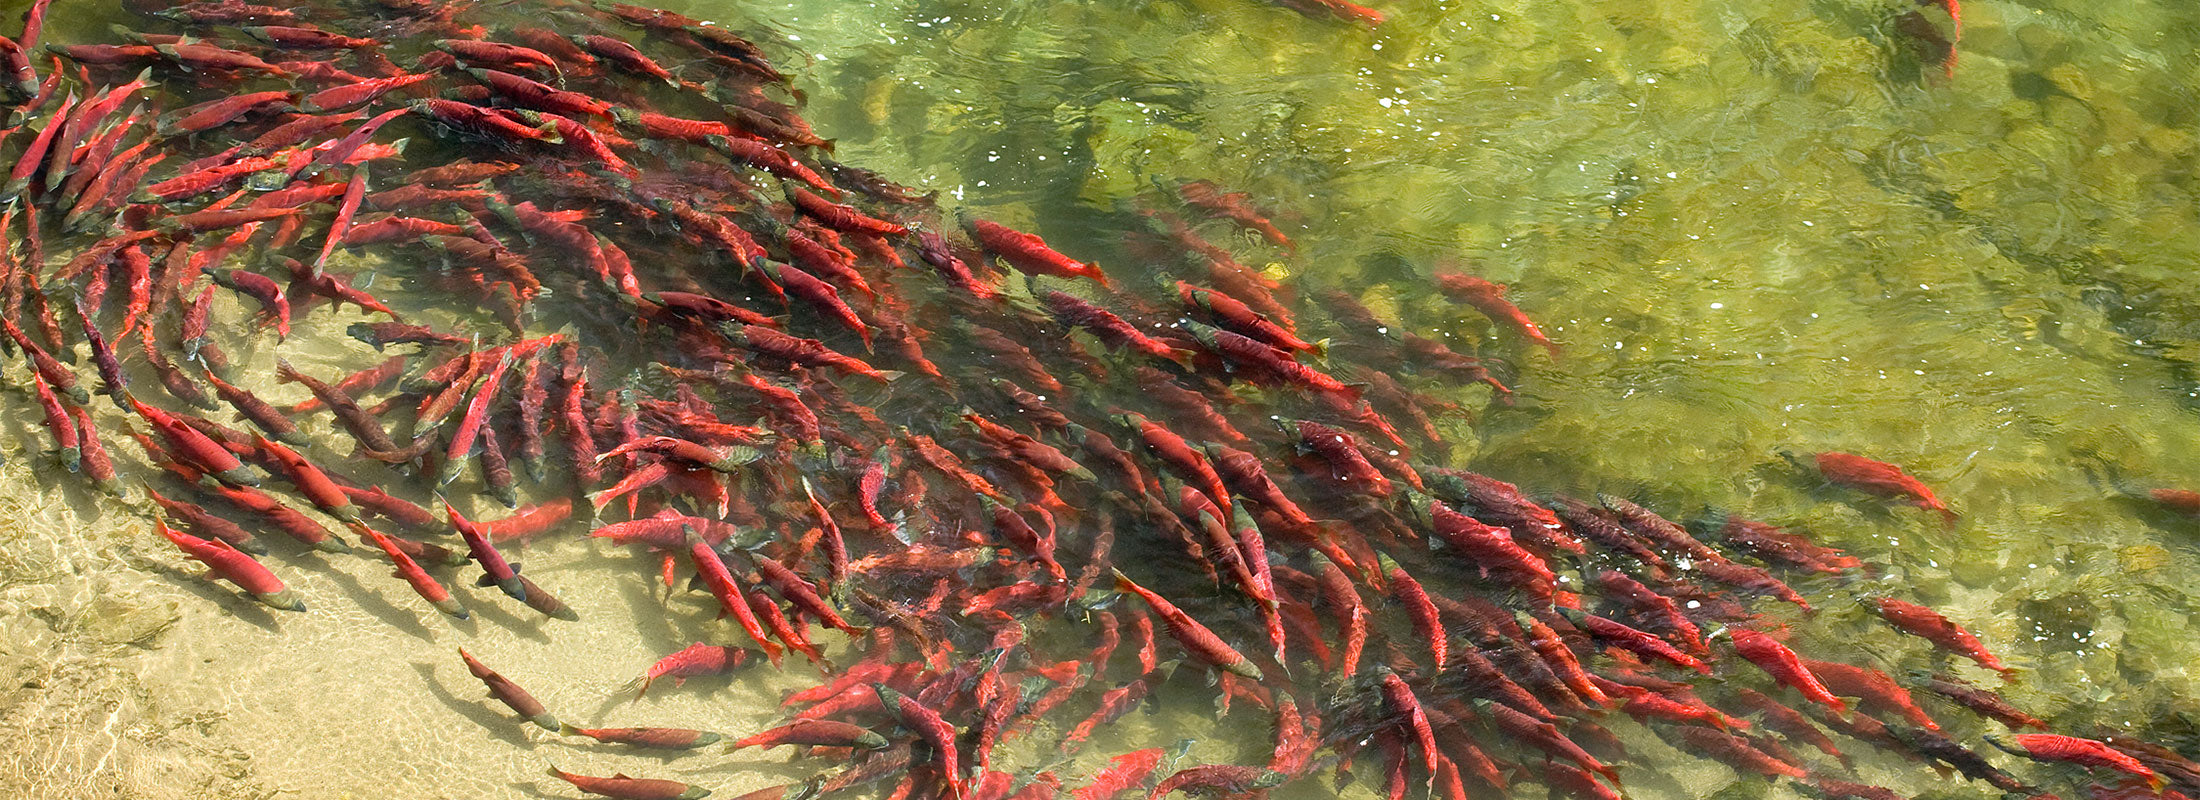 Aerial shot of red sockeye salmon spawning